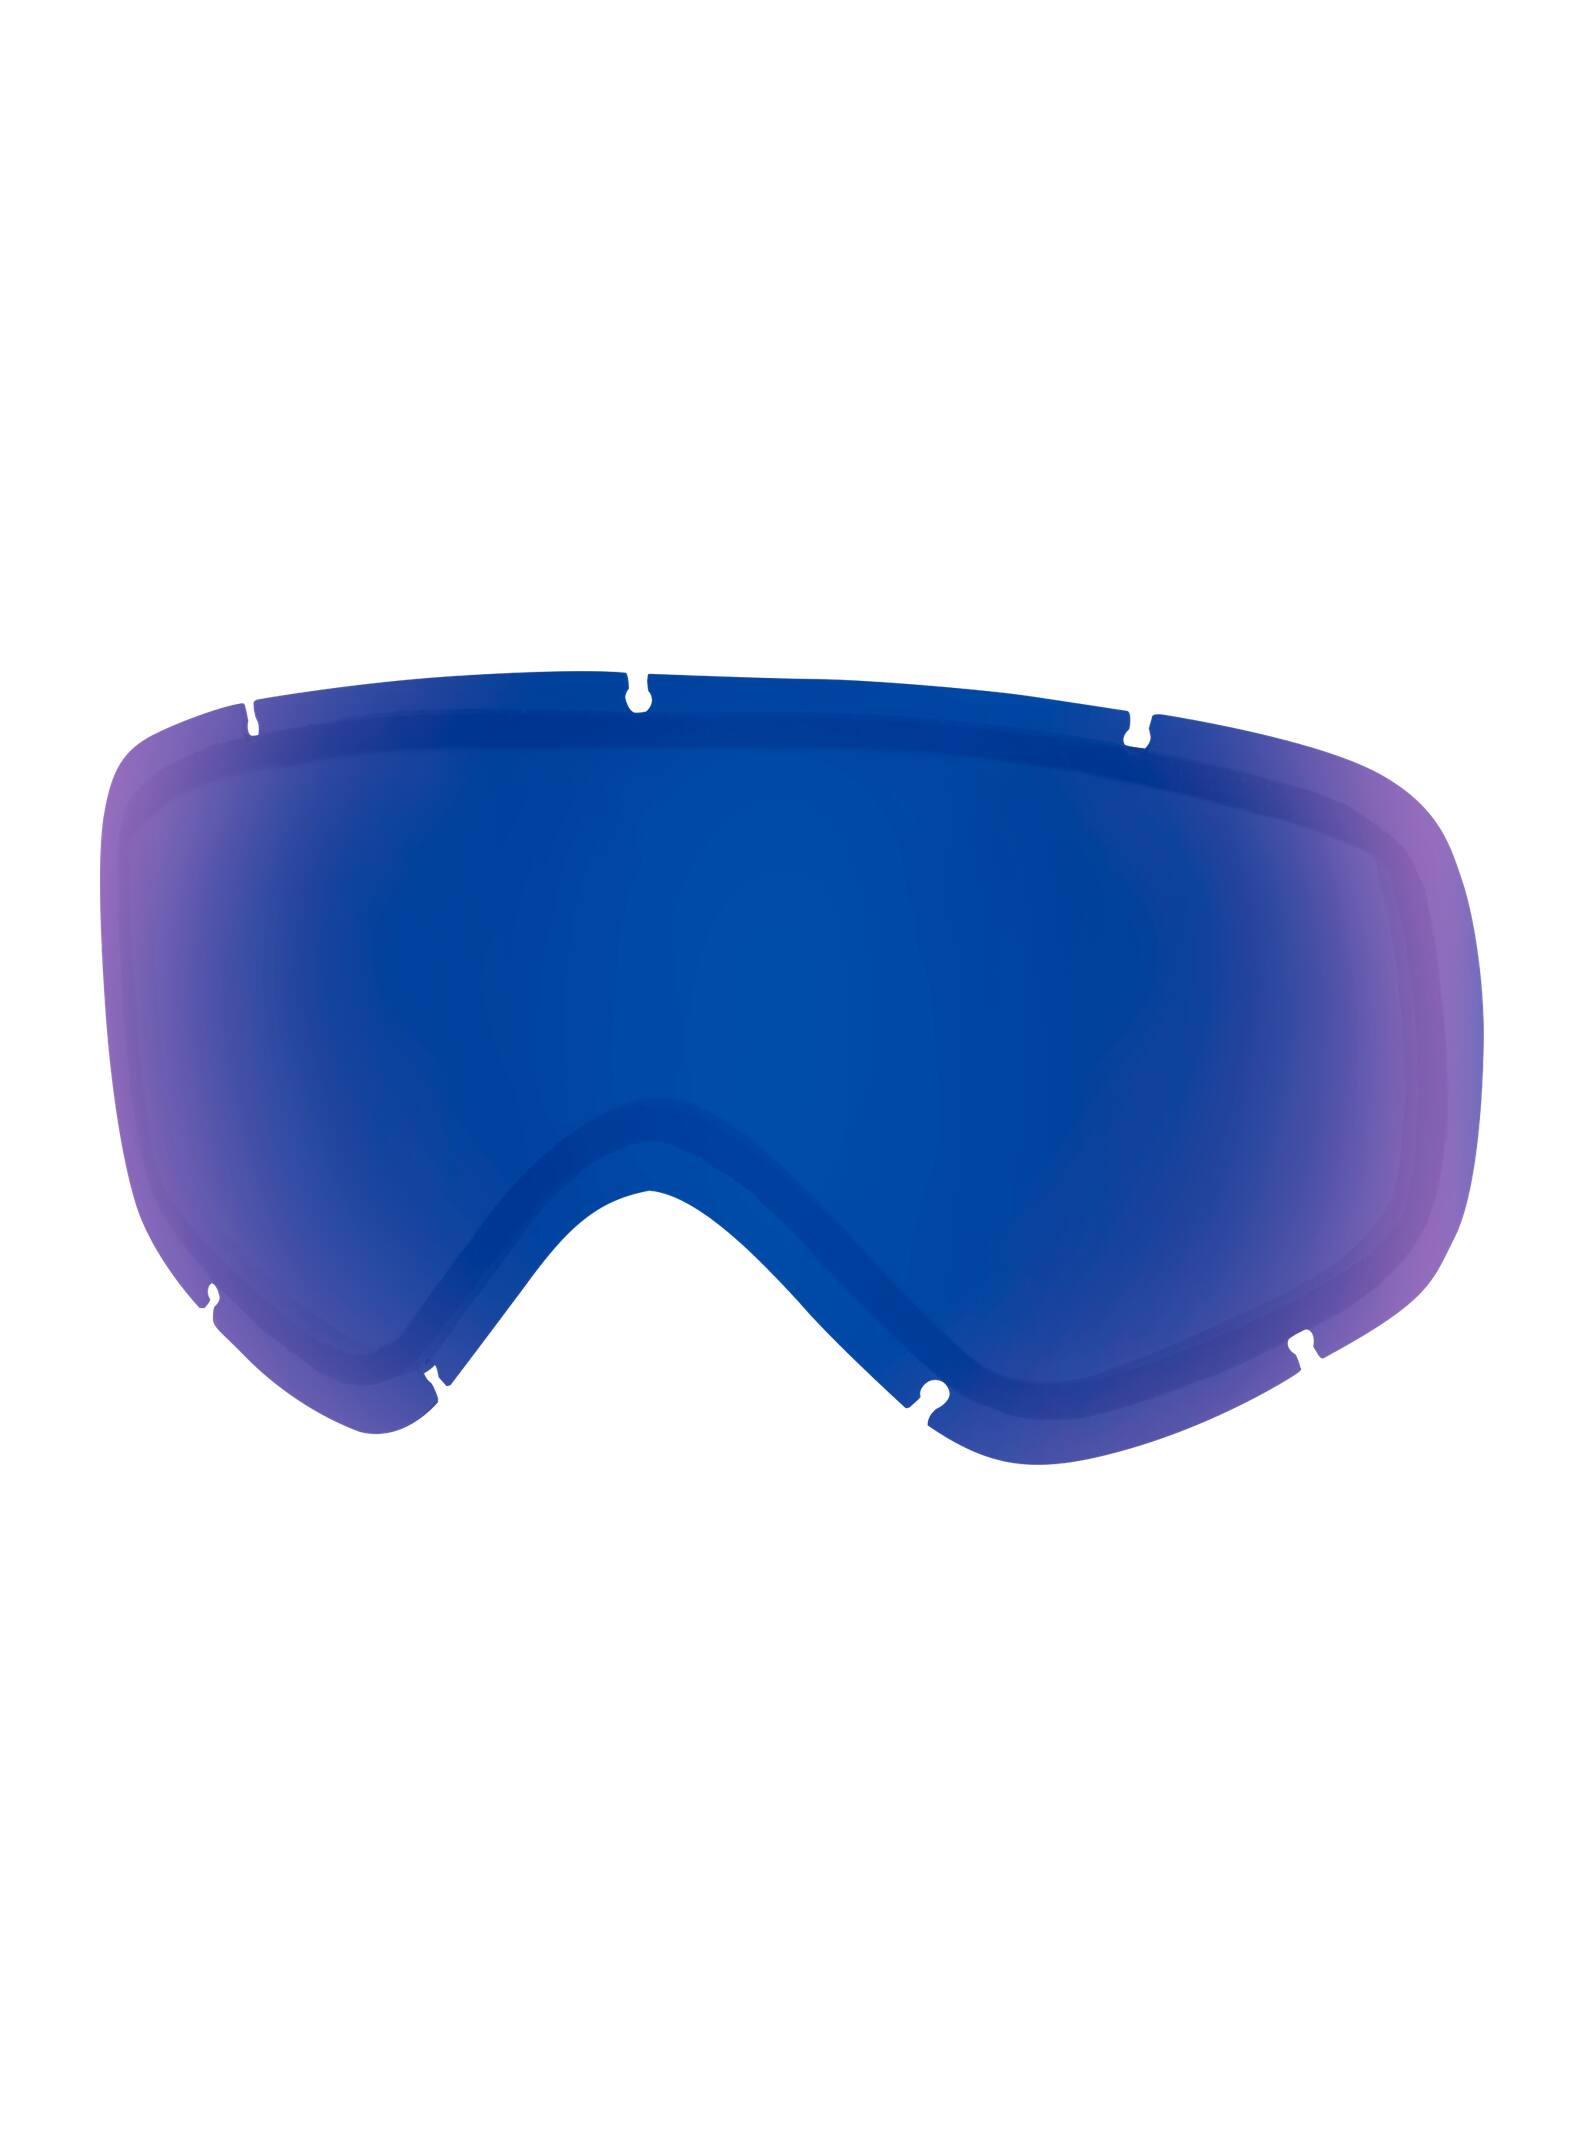 anon. Helix 2.0 Goggle Lens | Burton Snowboards Winter 16 US